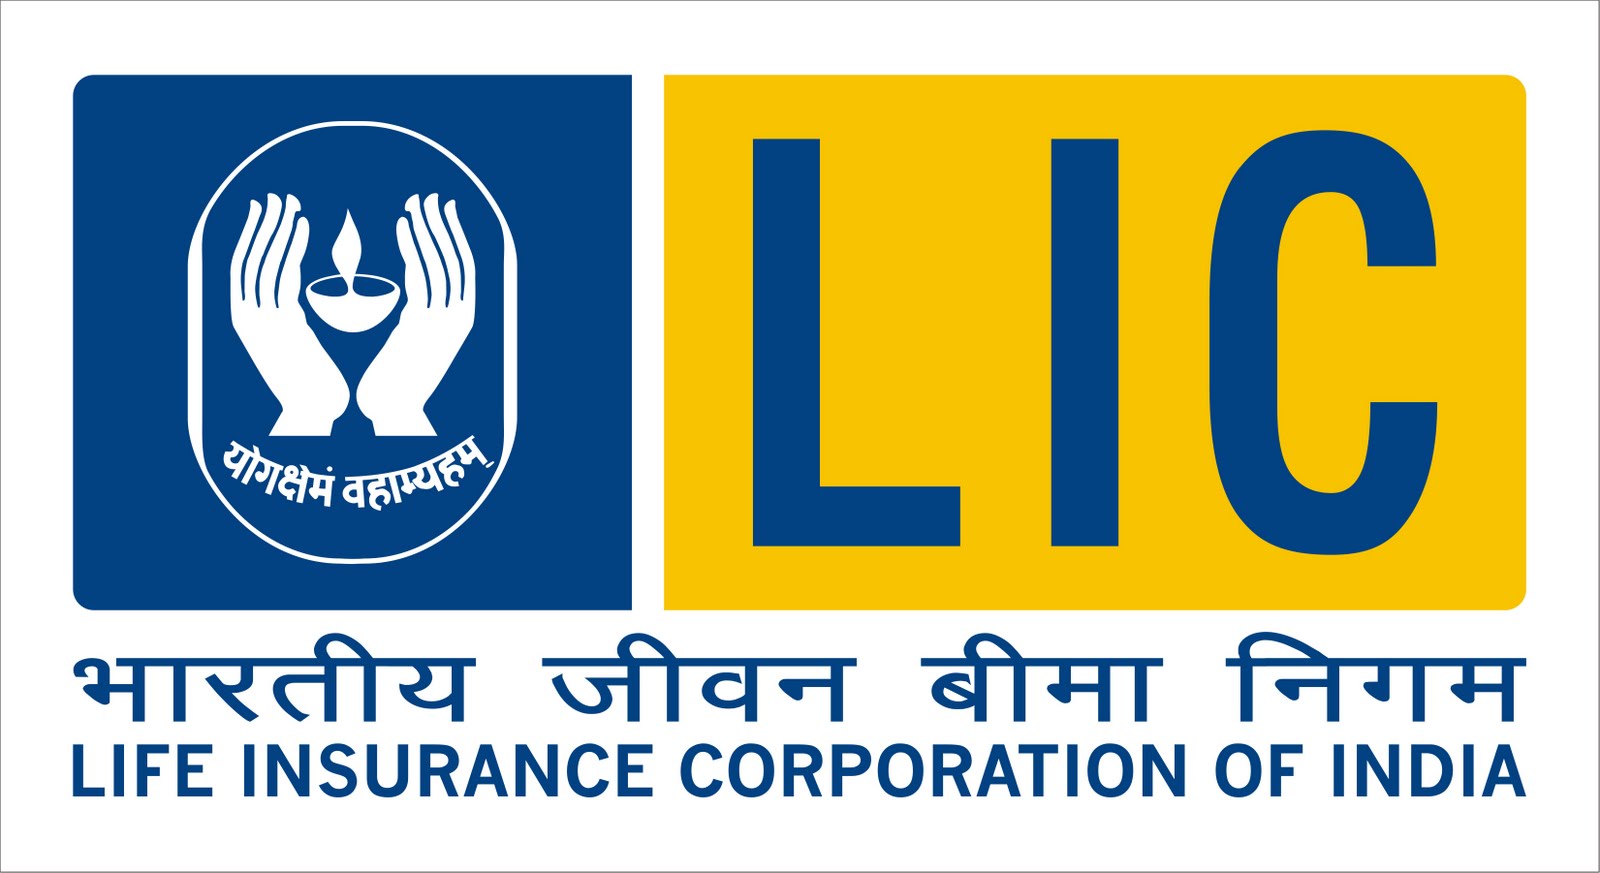 LIC_Logo